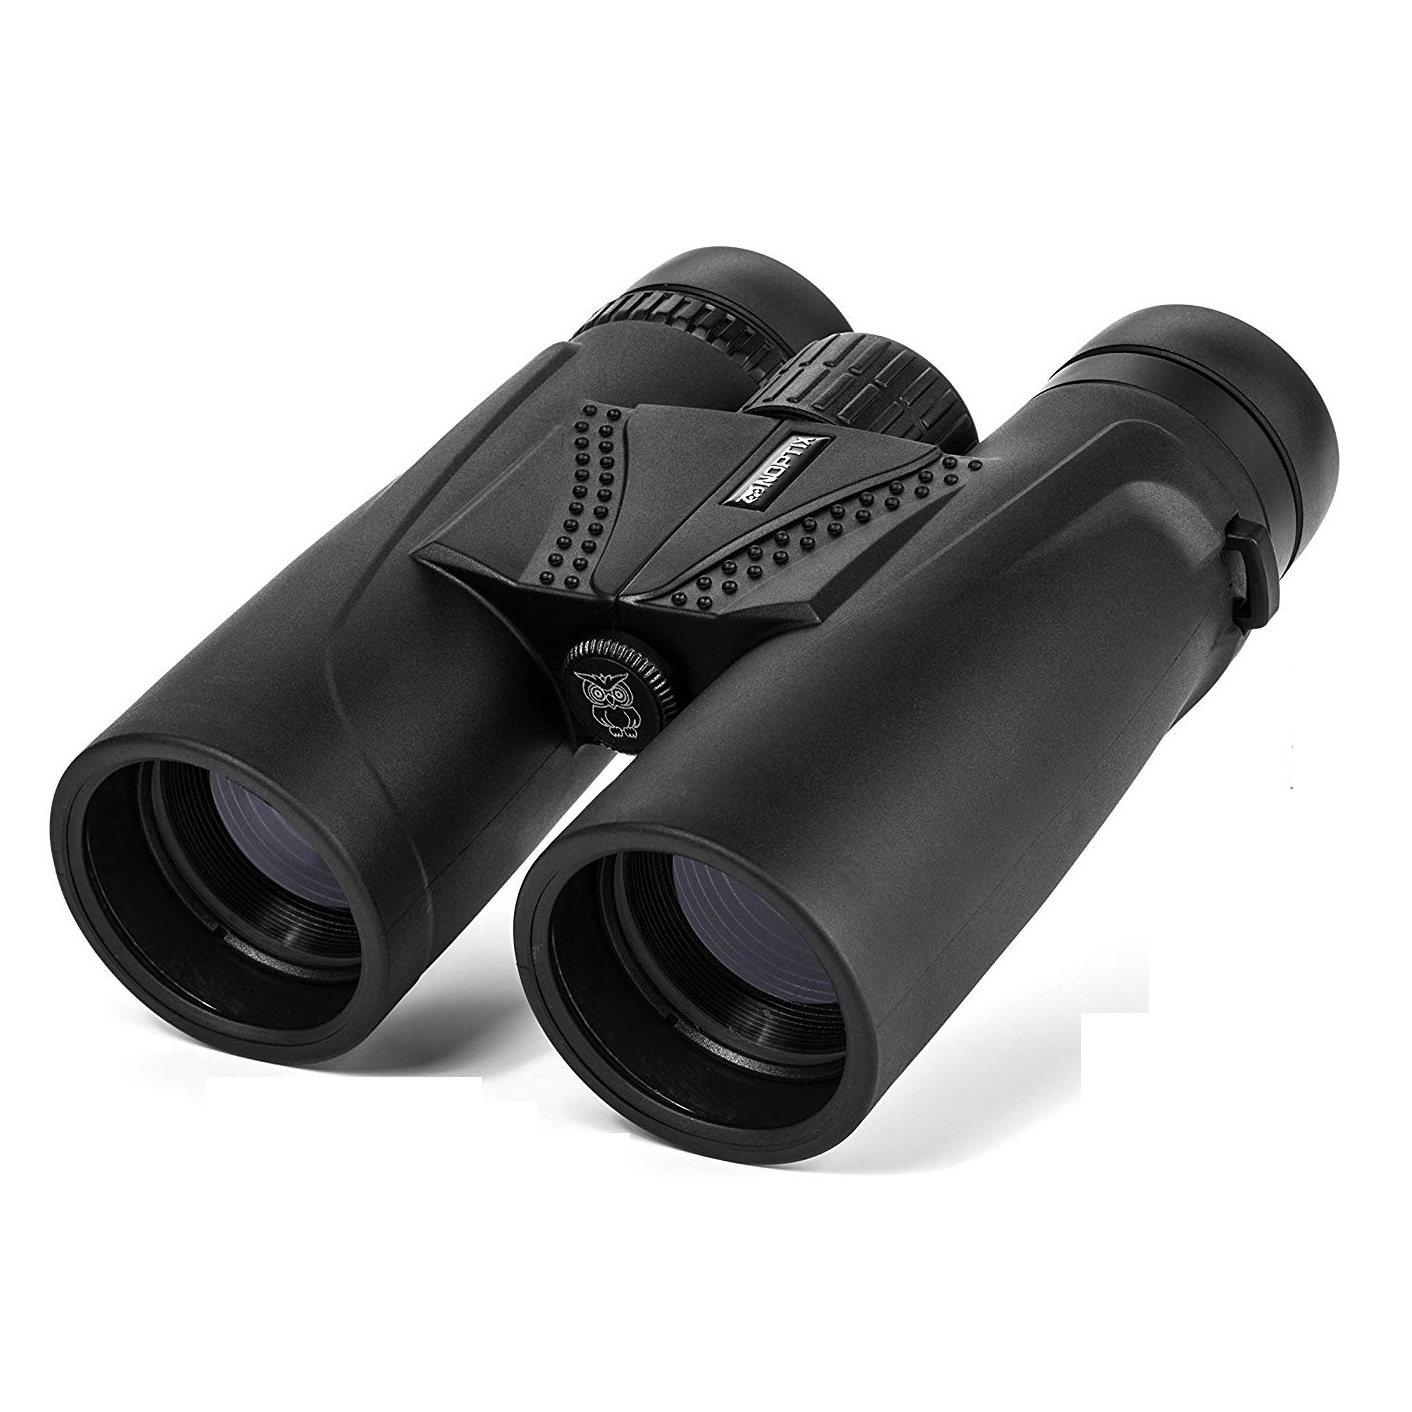 Noptix 10x42 Best Binocular for Birding